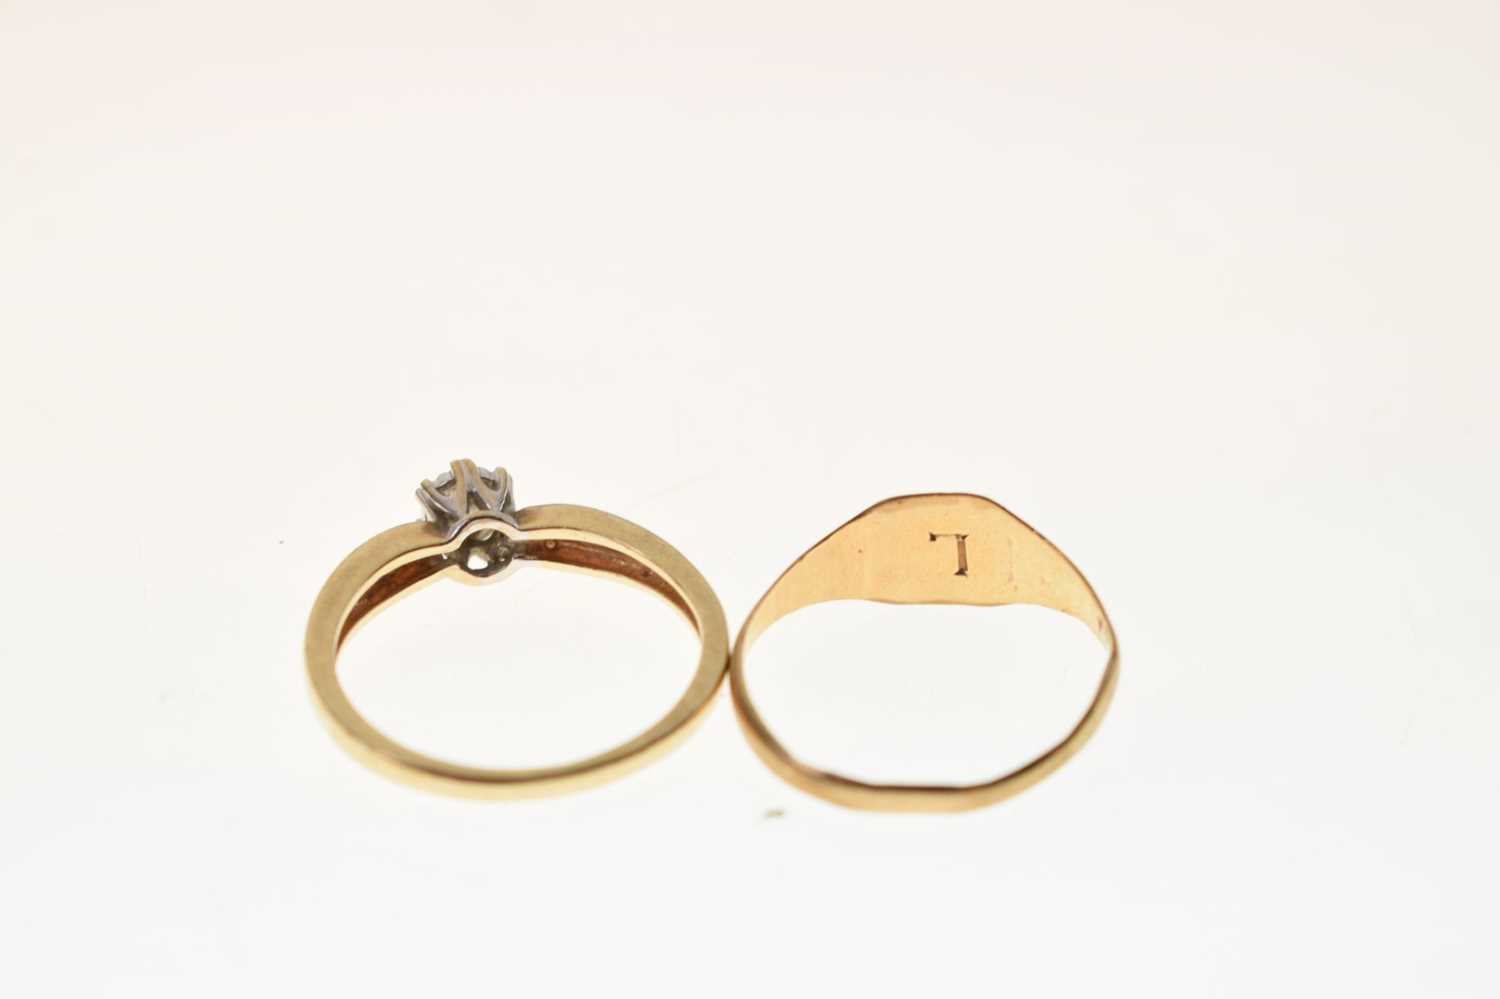 9ct gold illusion set diamond ring - Image 3 of 6